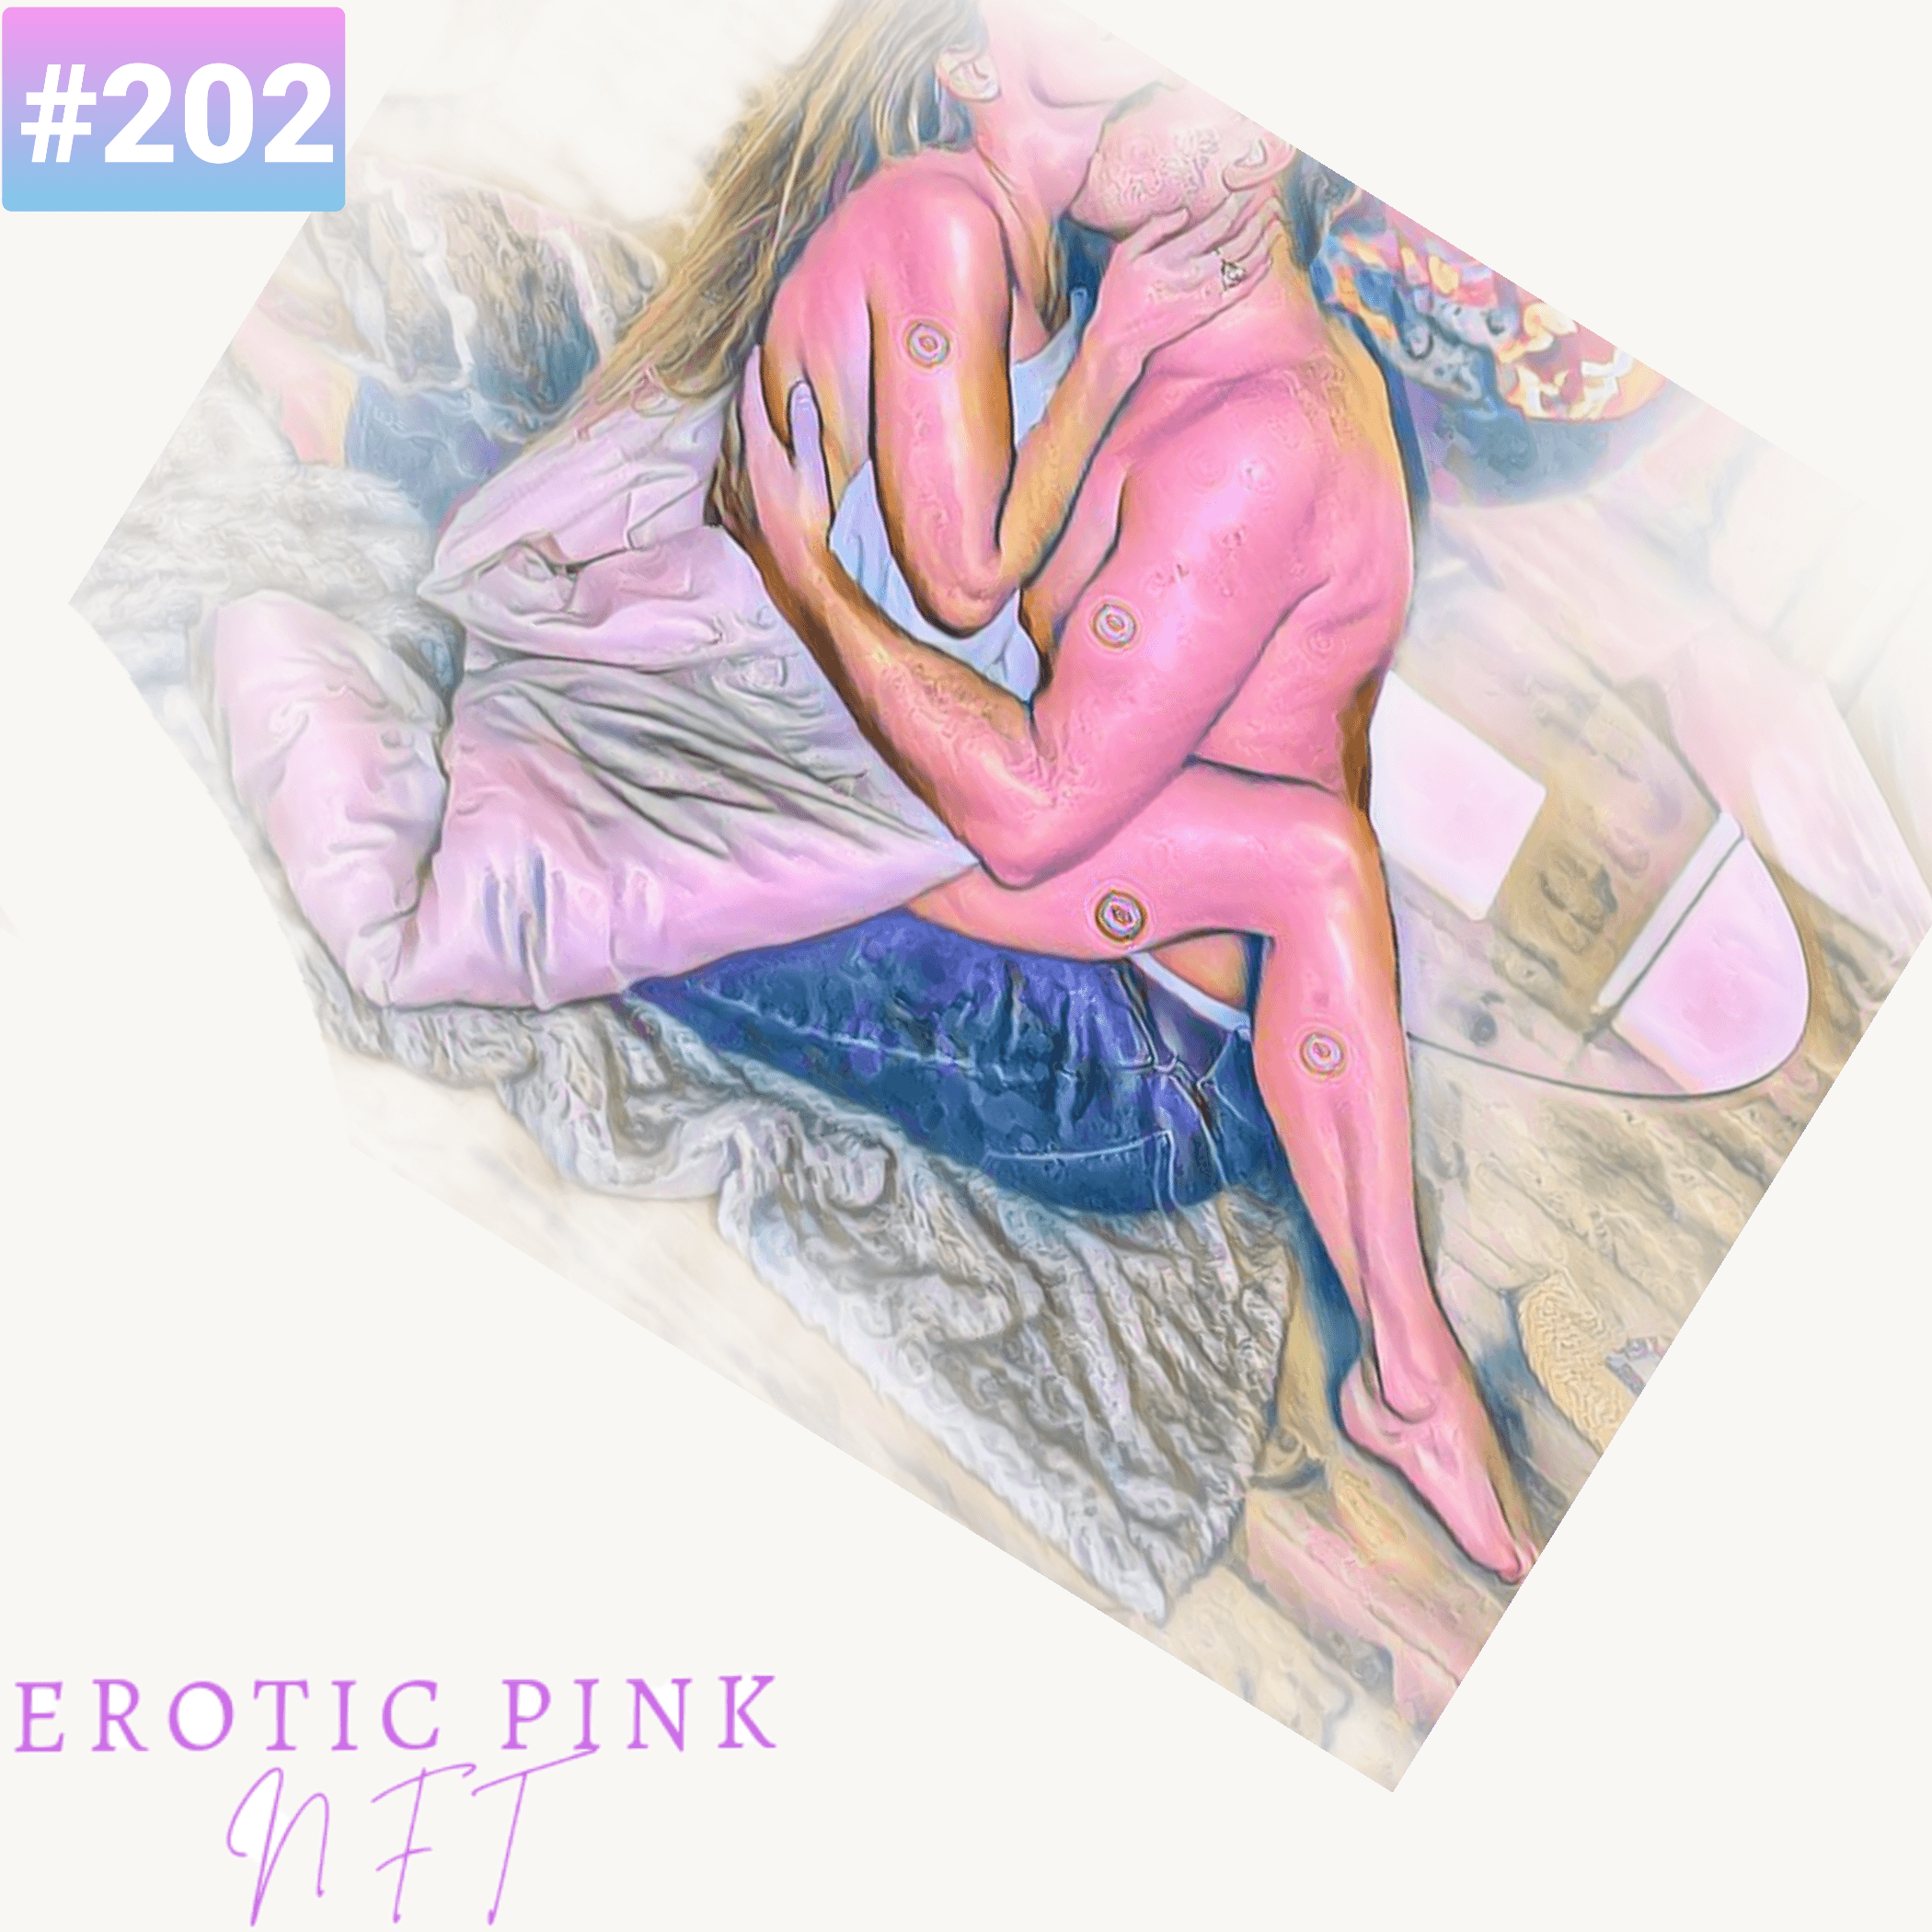 Erotic Pink #202